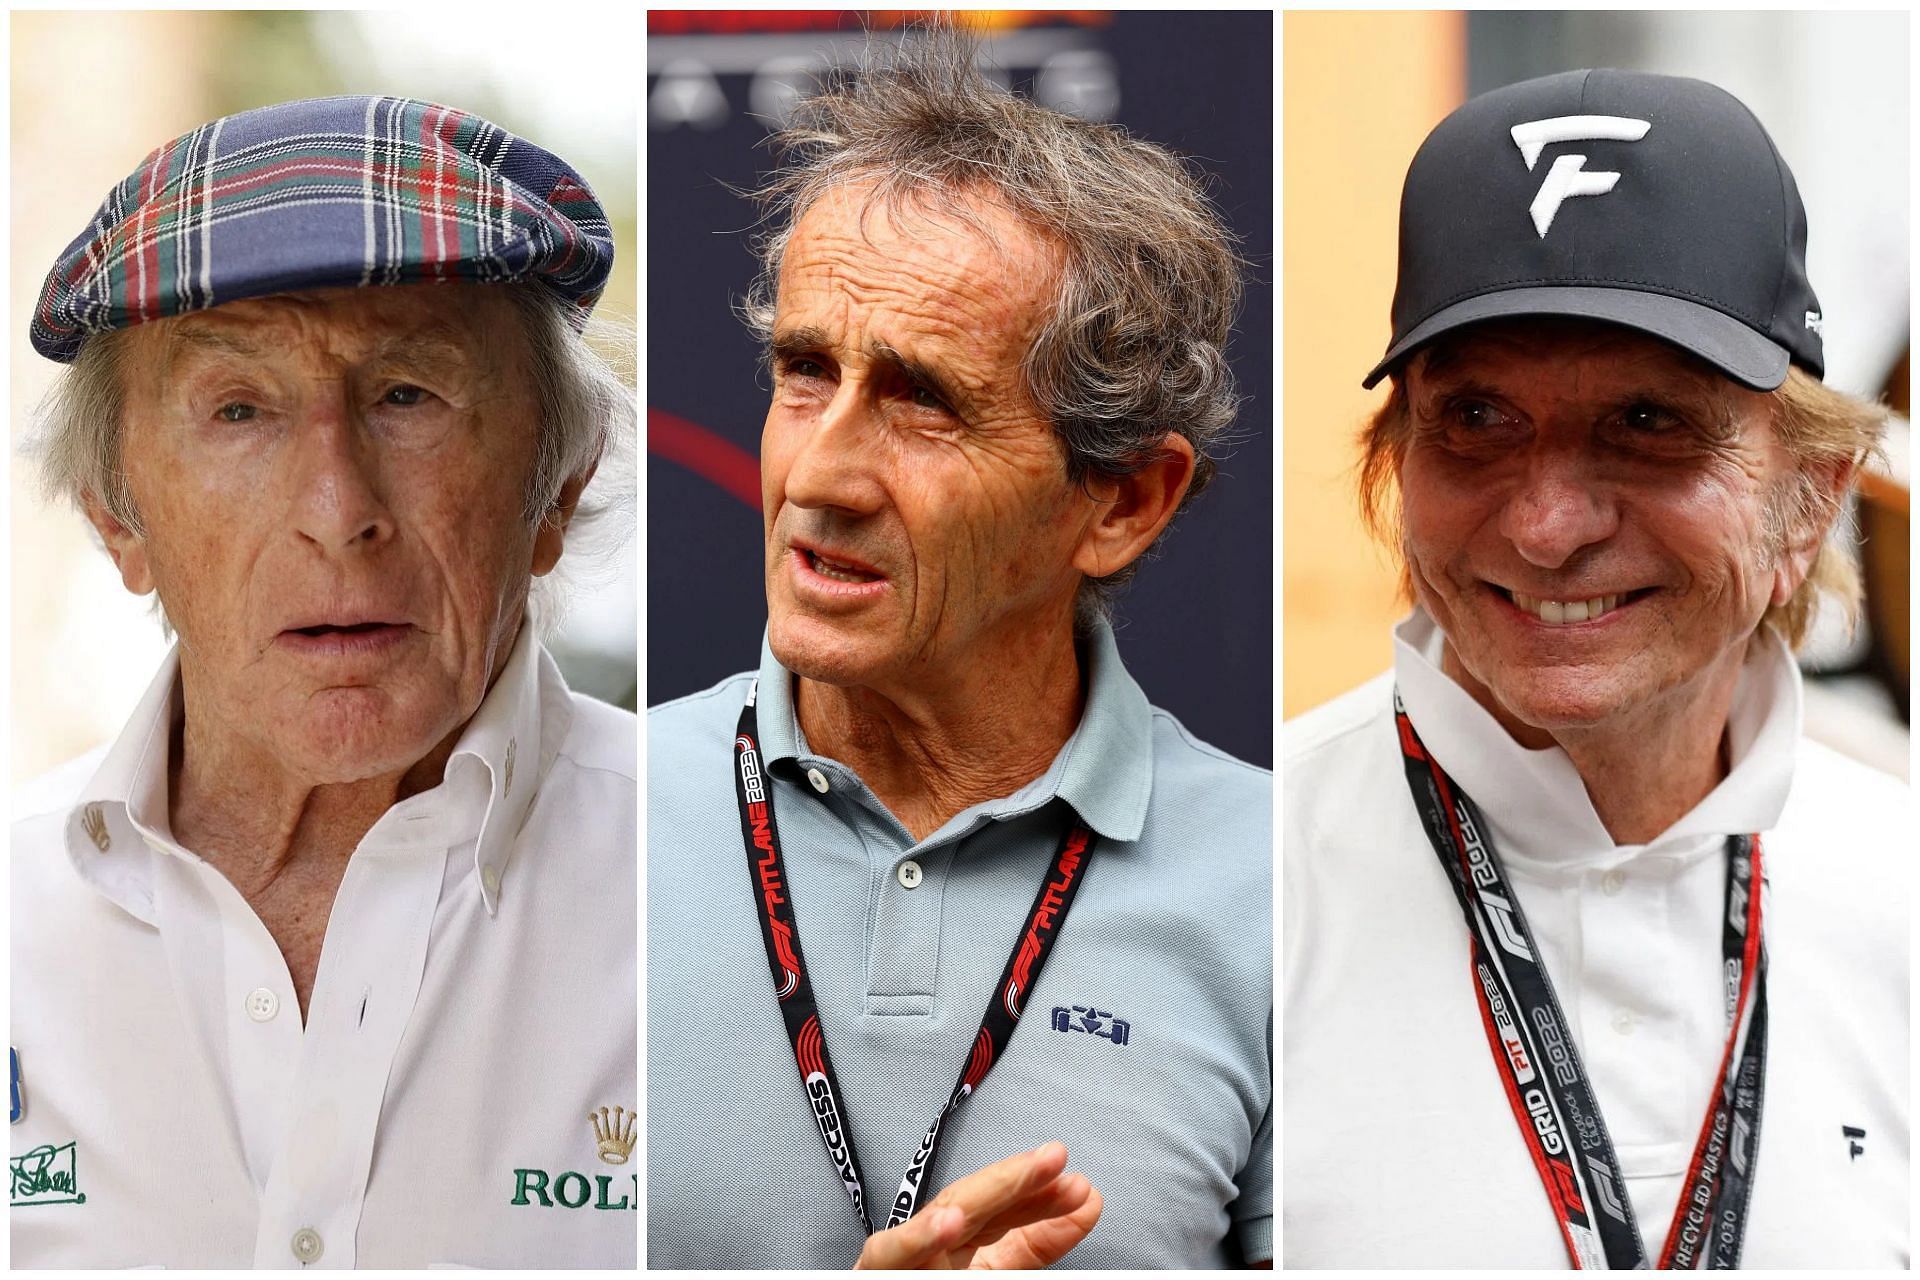 Sir Jackie Stewart (L), Alain Prost (C), and Emerson Fittipaldi (R)